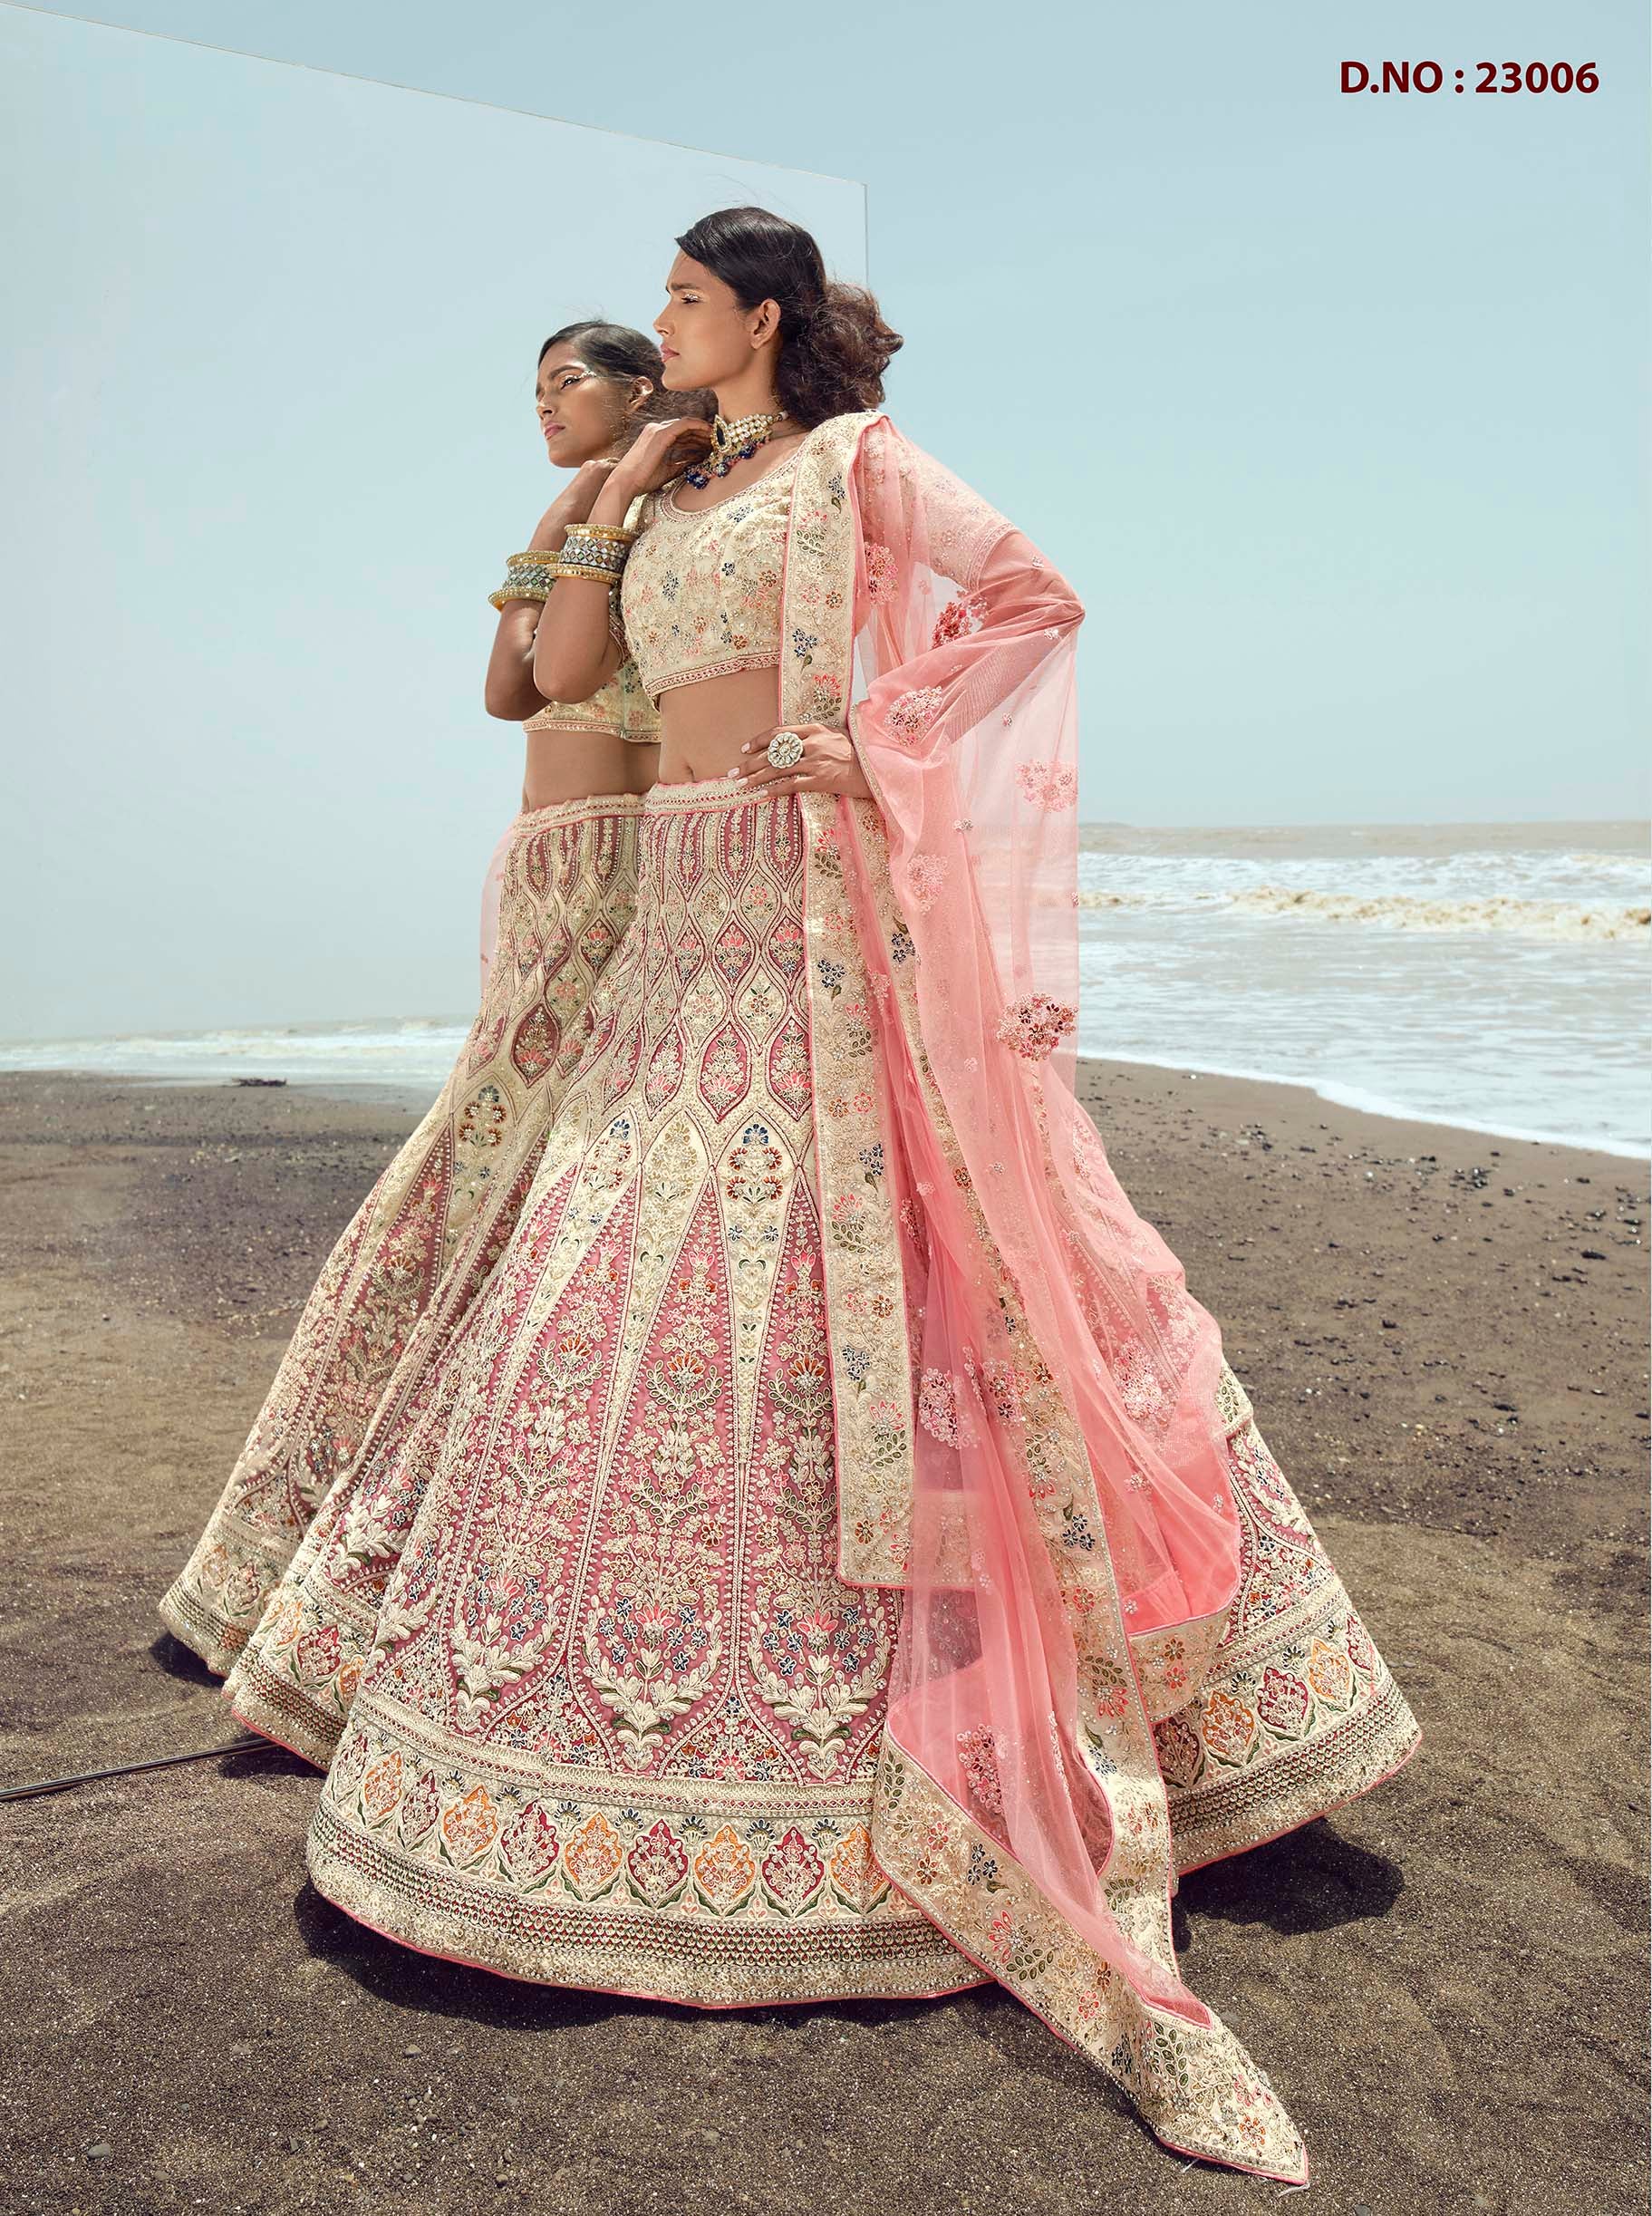 Manvansh Trends Pastel Pink Colored Bridal Wear Designer Embroidered Lehenga  Choli at Rs 5100 in Surat